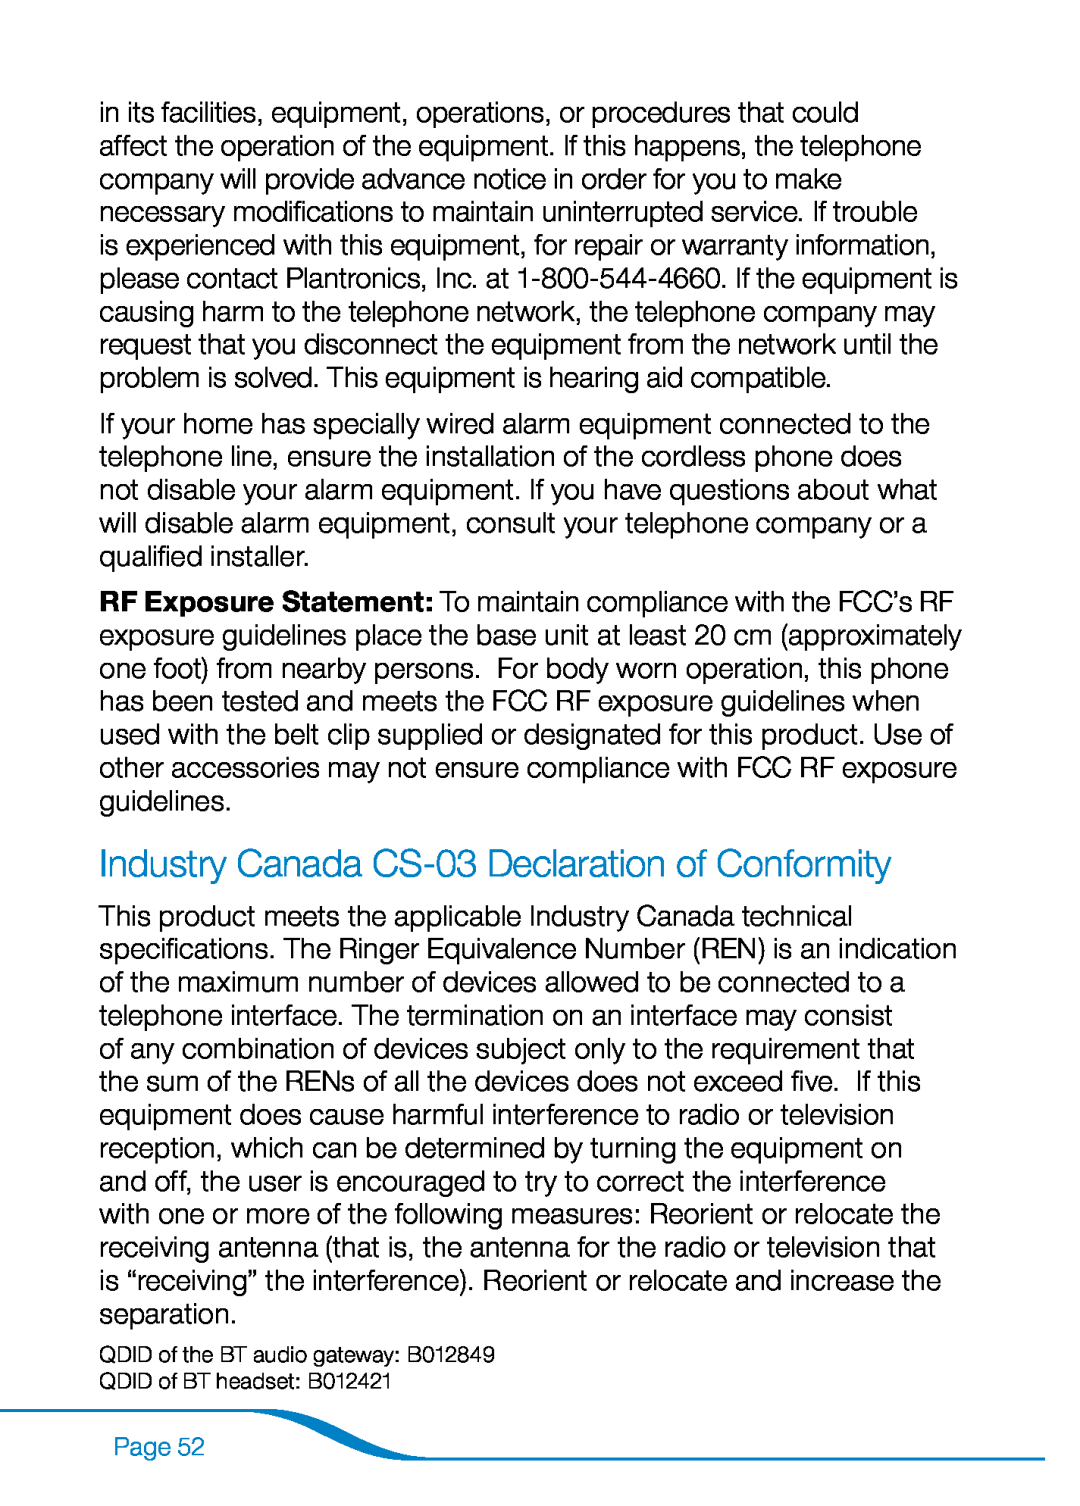 Plantronics 655 manual Industry Canada CS-03Declaration of Conformity, QDID of the BT audio gateway B012849 